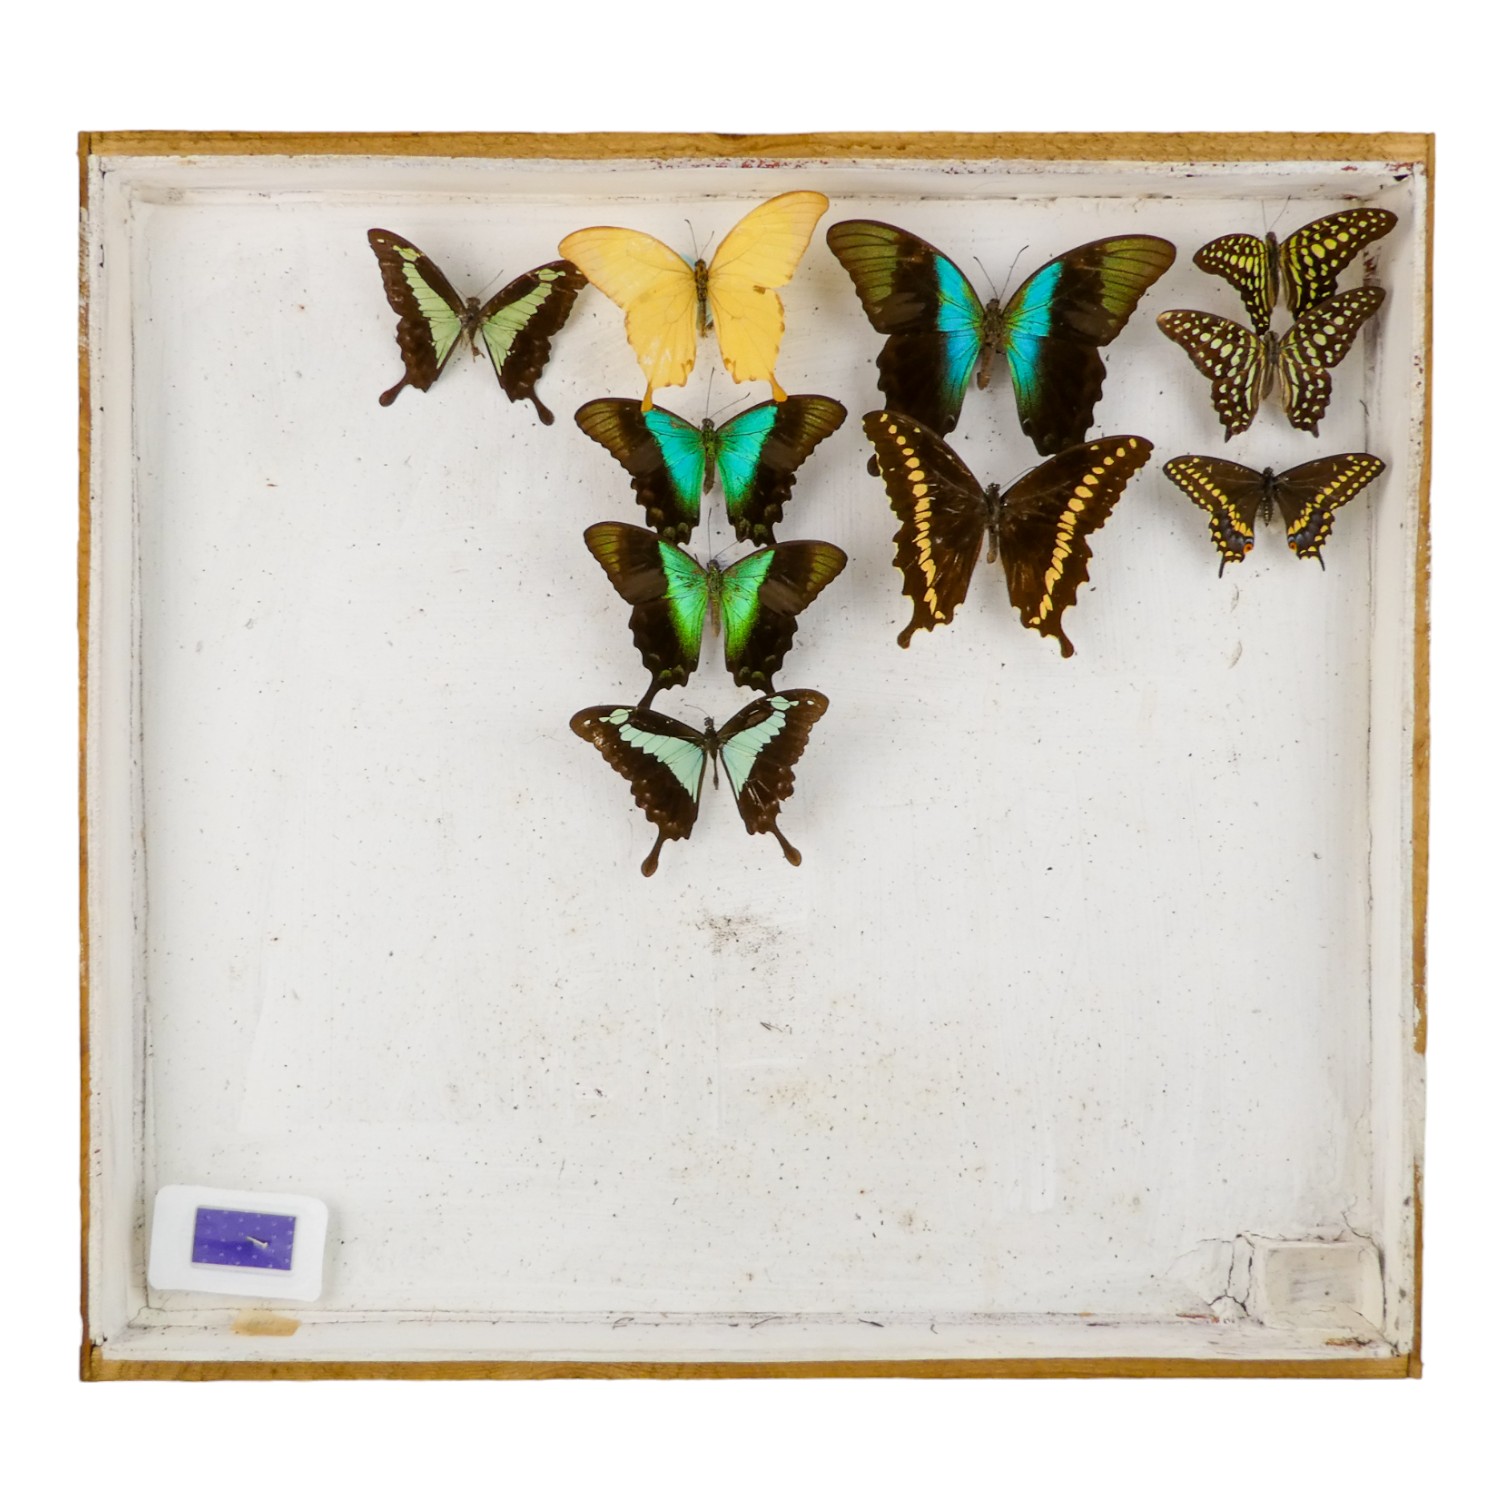 A case of ten butterflies - including Apple Green Swallowtail, MacKinnion's Swallowtail and